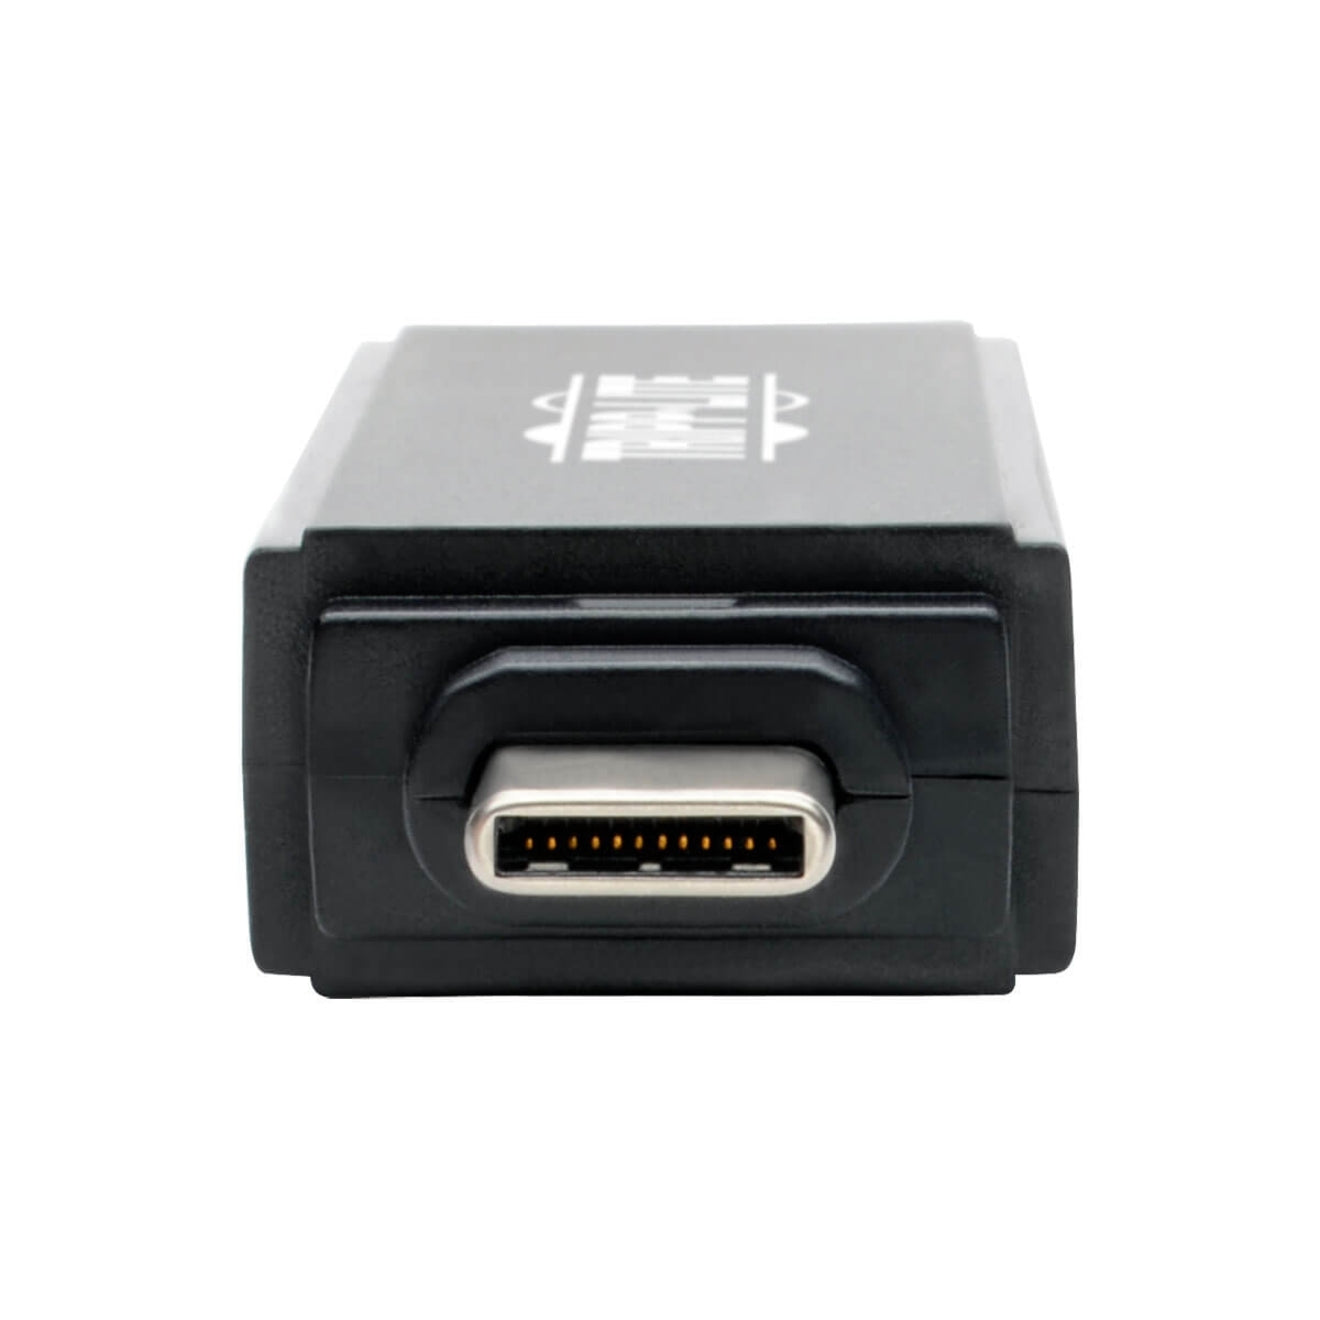 Tripp Lite U452-000-SD-A USB-C Memory Card Reader Adapter 2-in-1 USB-A/USB-C, USB 3.1 Gen 1